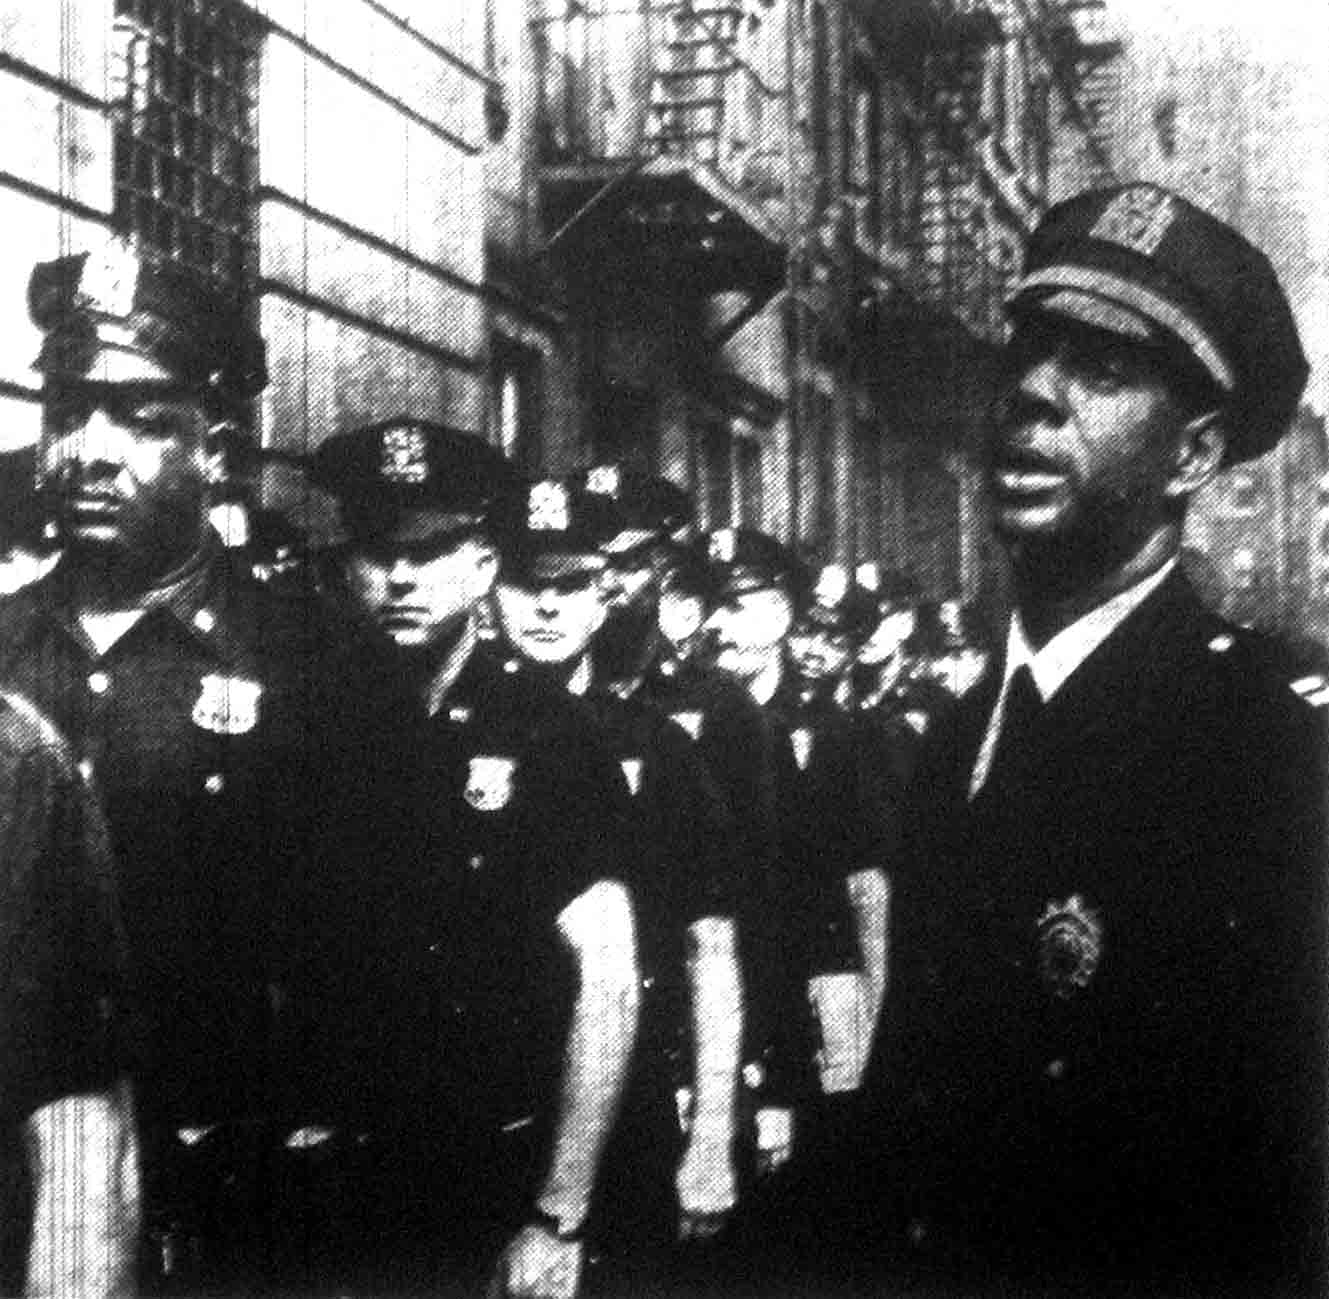 NYPD Captain Lloyd Sealy Harlem riot 1964